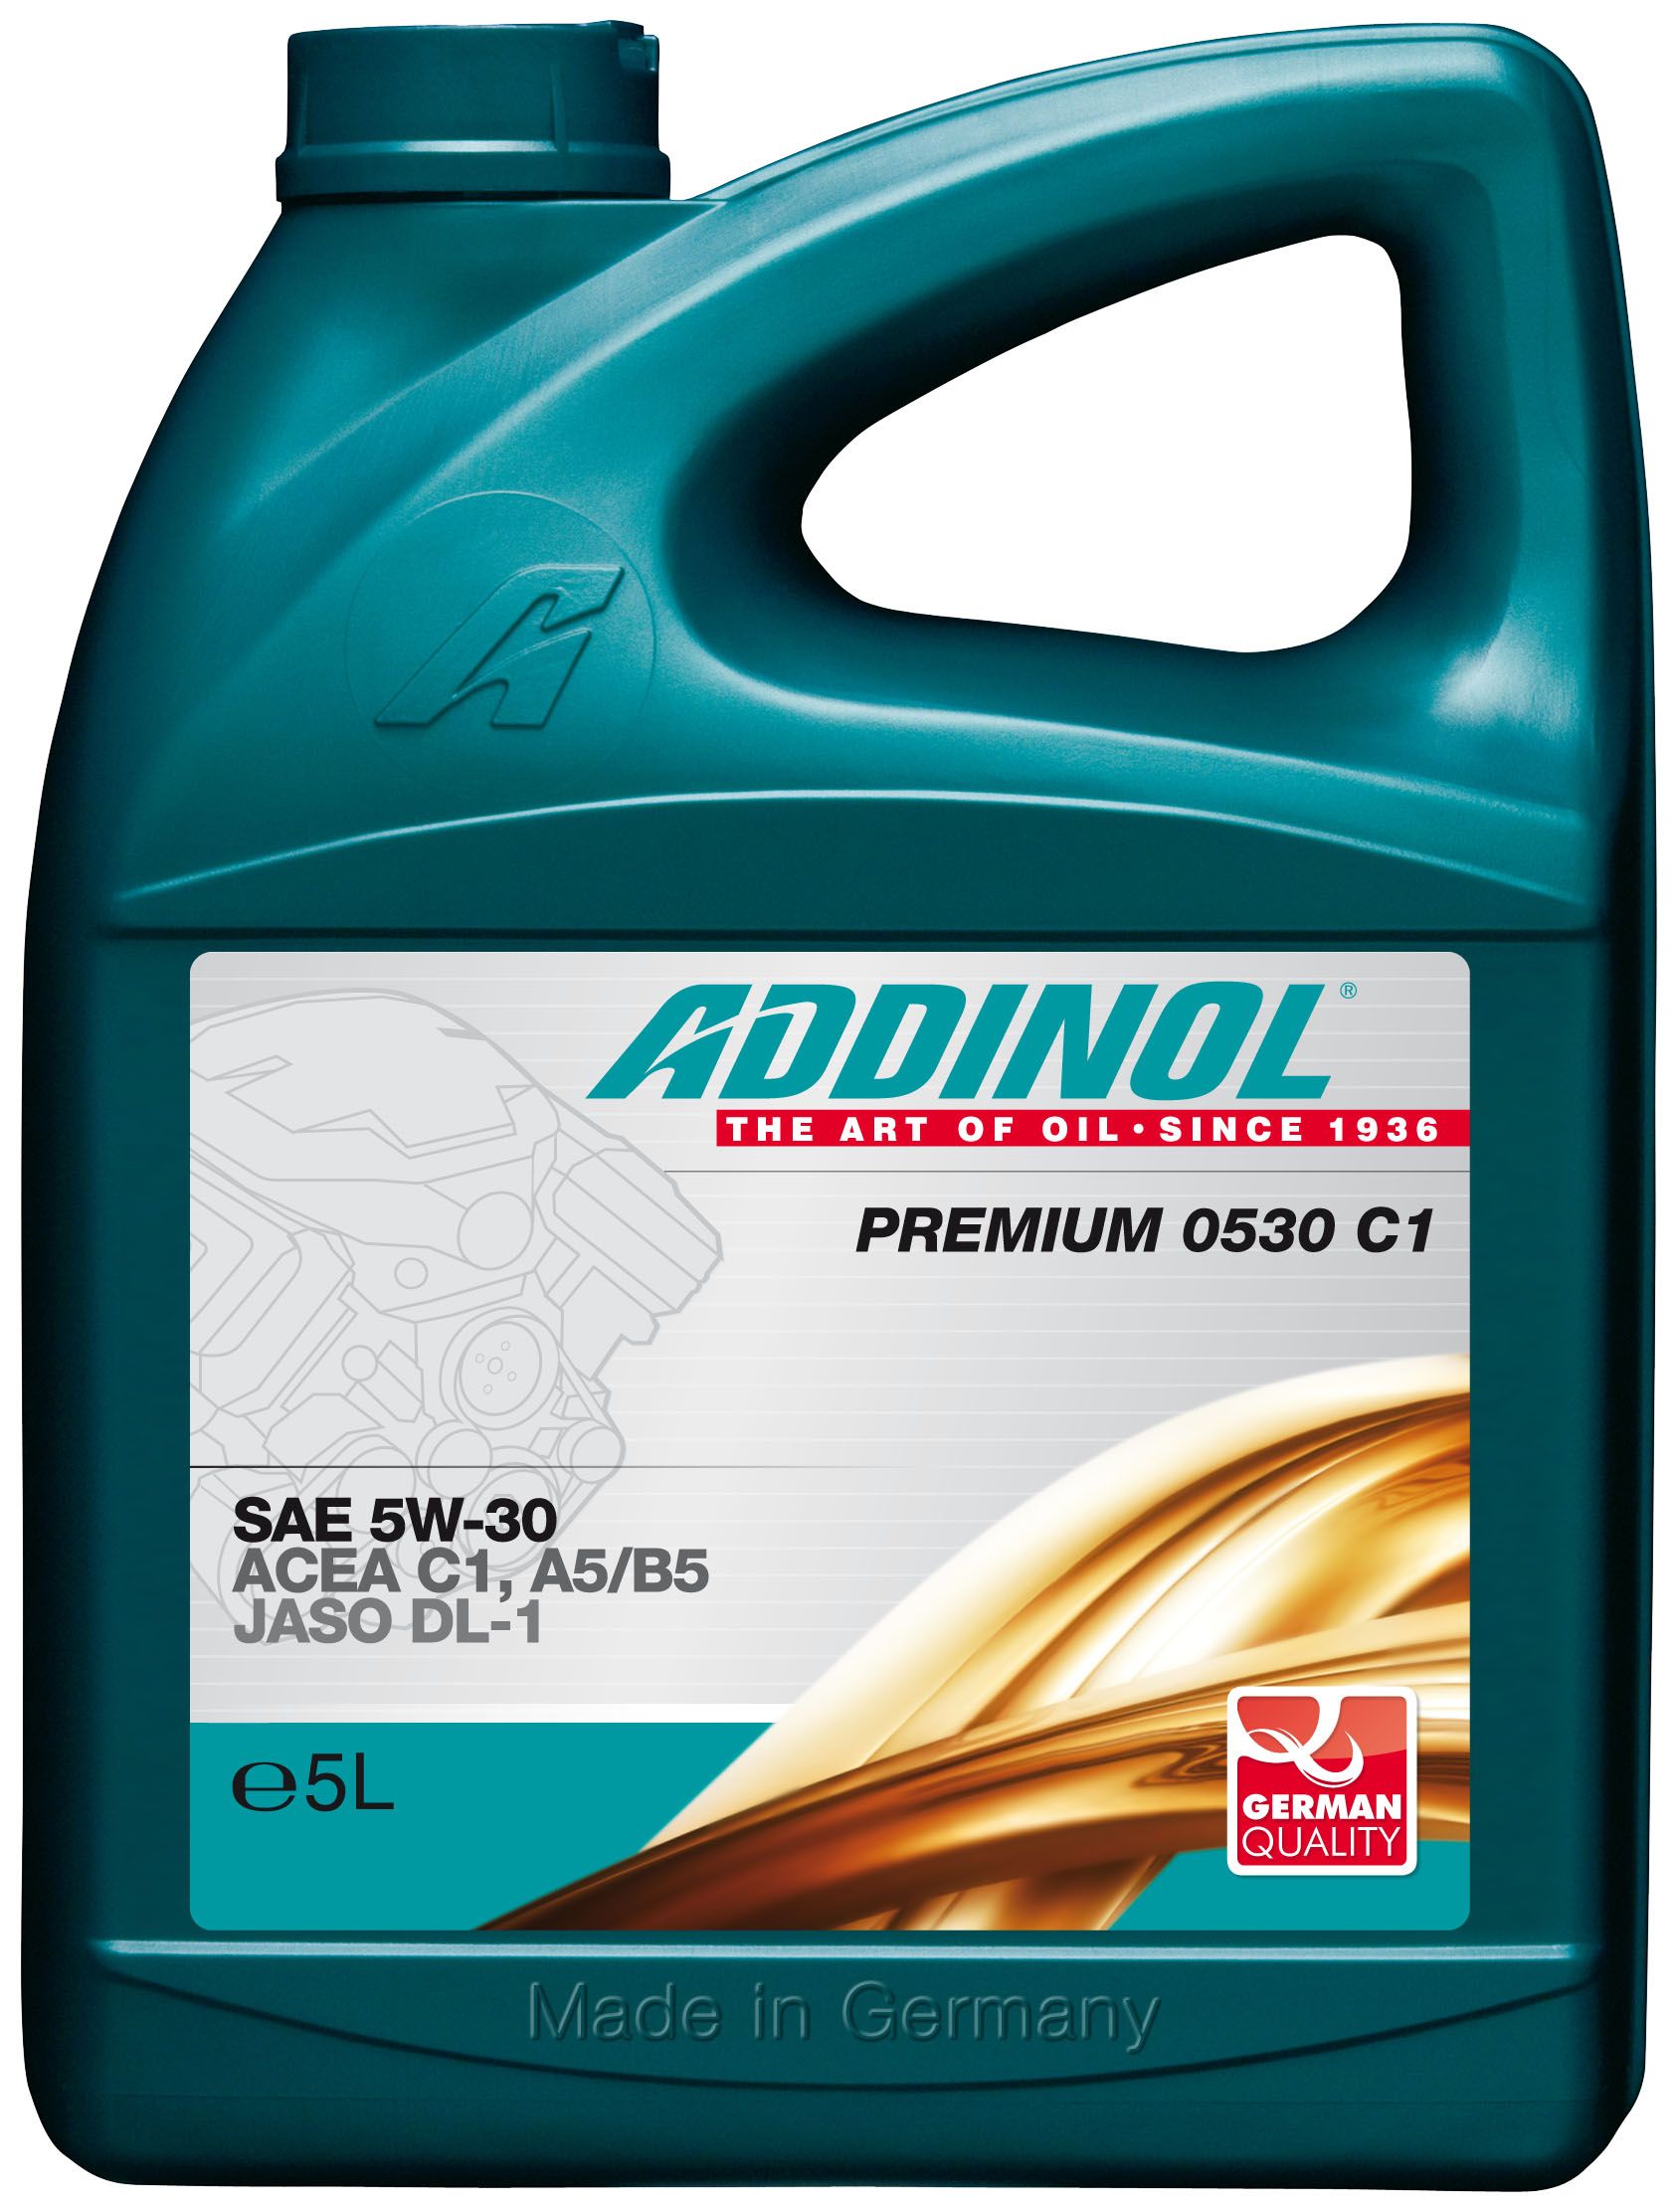 Моторные масла курск. Addinol 4014766241108 масло моторное синтетическое "Giga Light (Motorenol) MV 0530 ll 5w-30", 5л. Addinol Premium 0530 c3-DX 5w-30 5л. Addinol Diesel Longlife MD 1548 (SAE 15w-40). Addinol Semi Synth 1040.